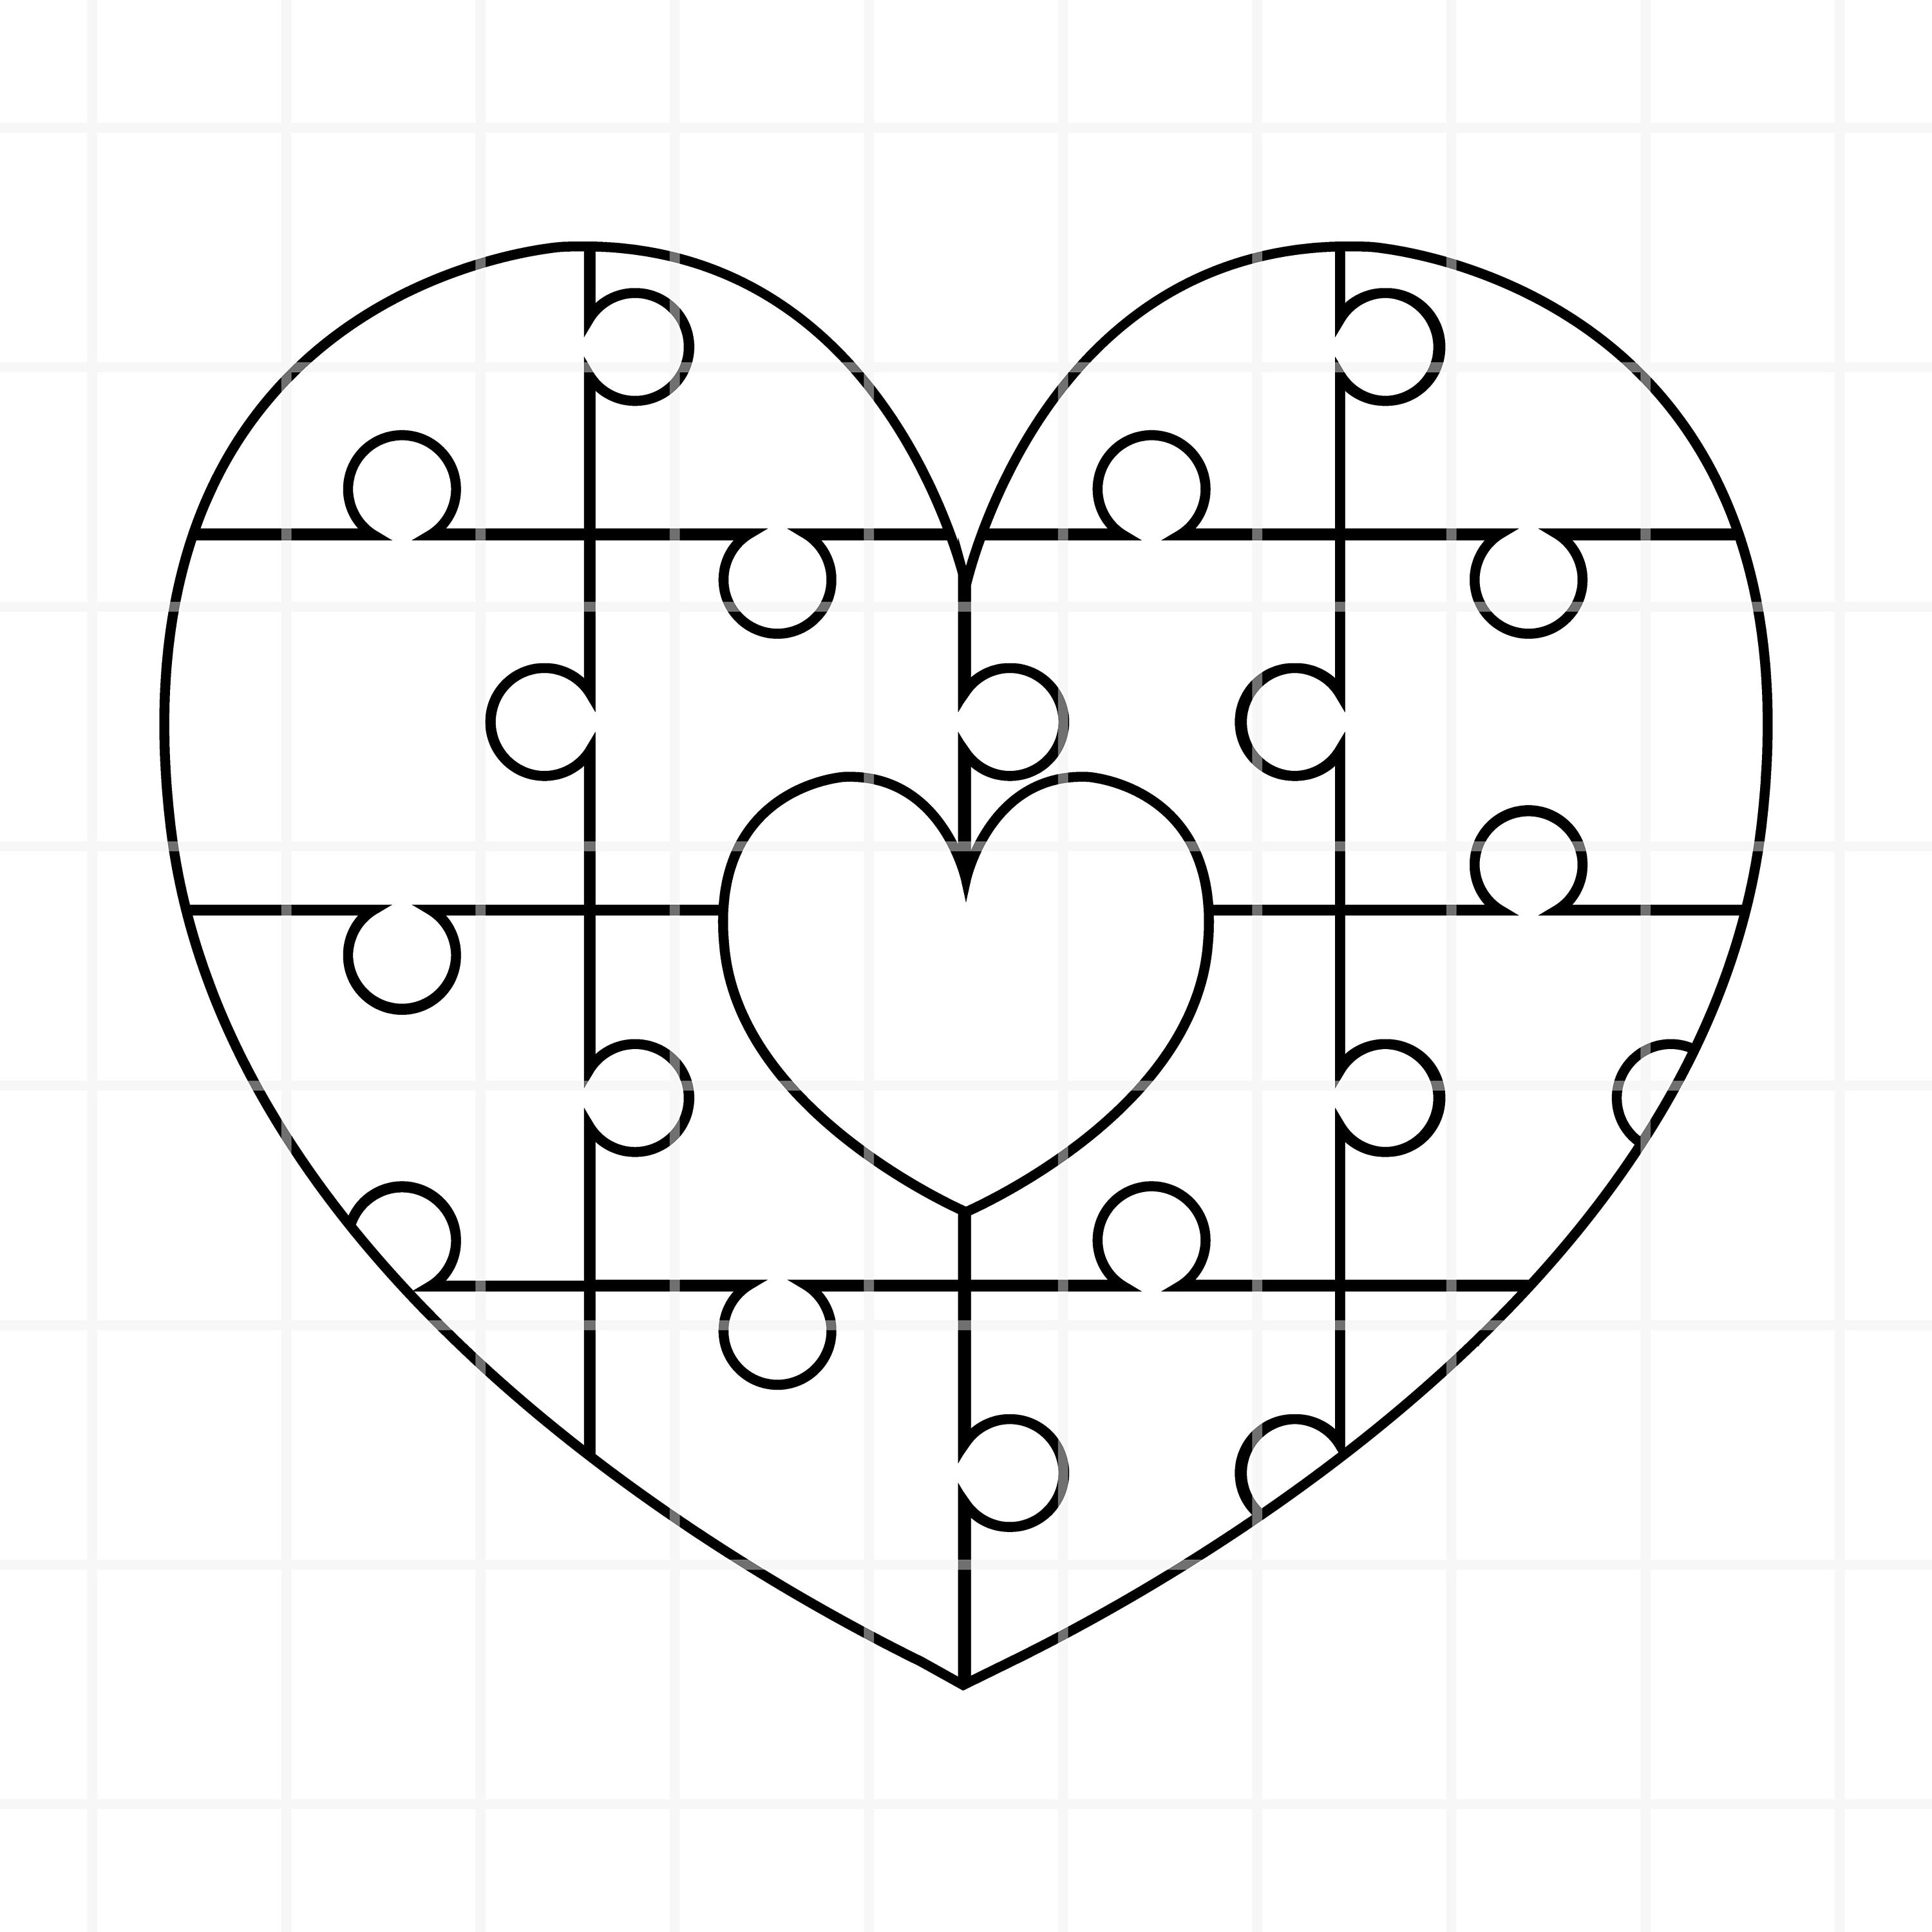 5 piece heart puzzle template